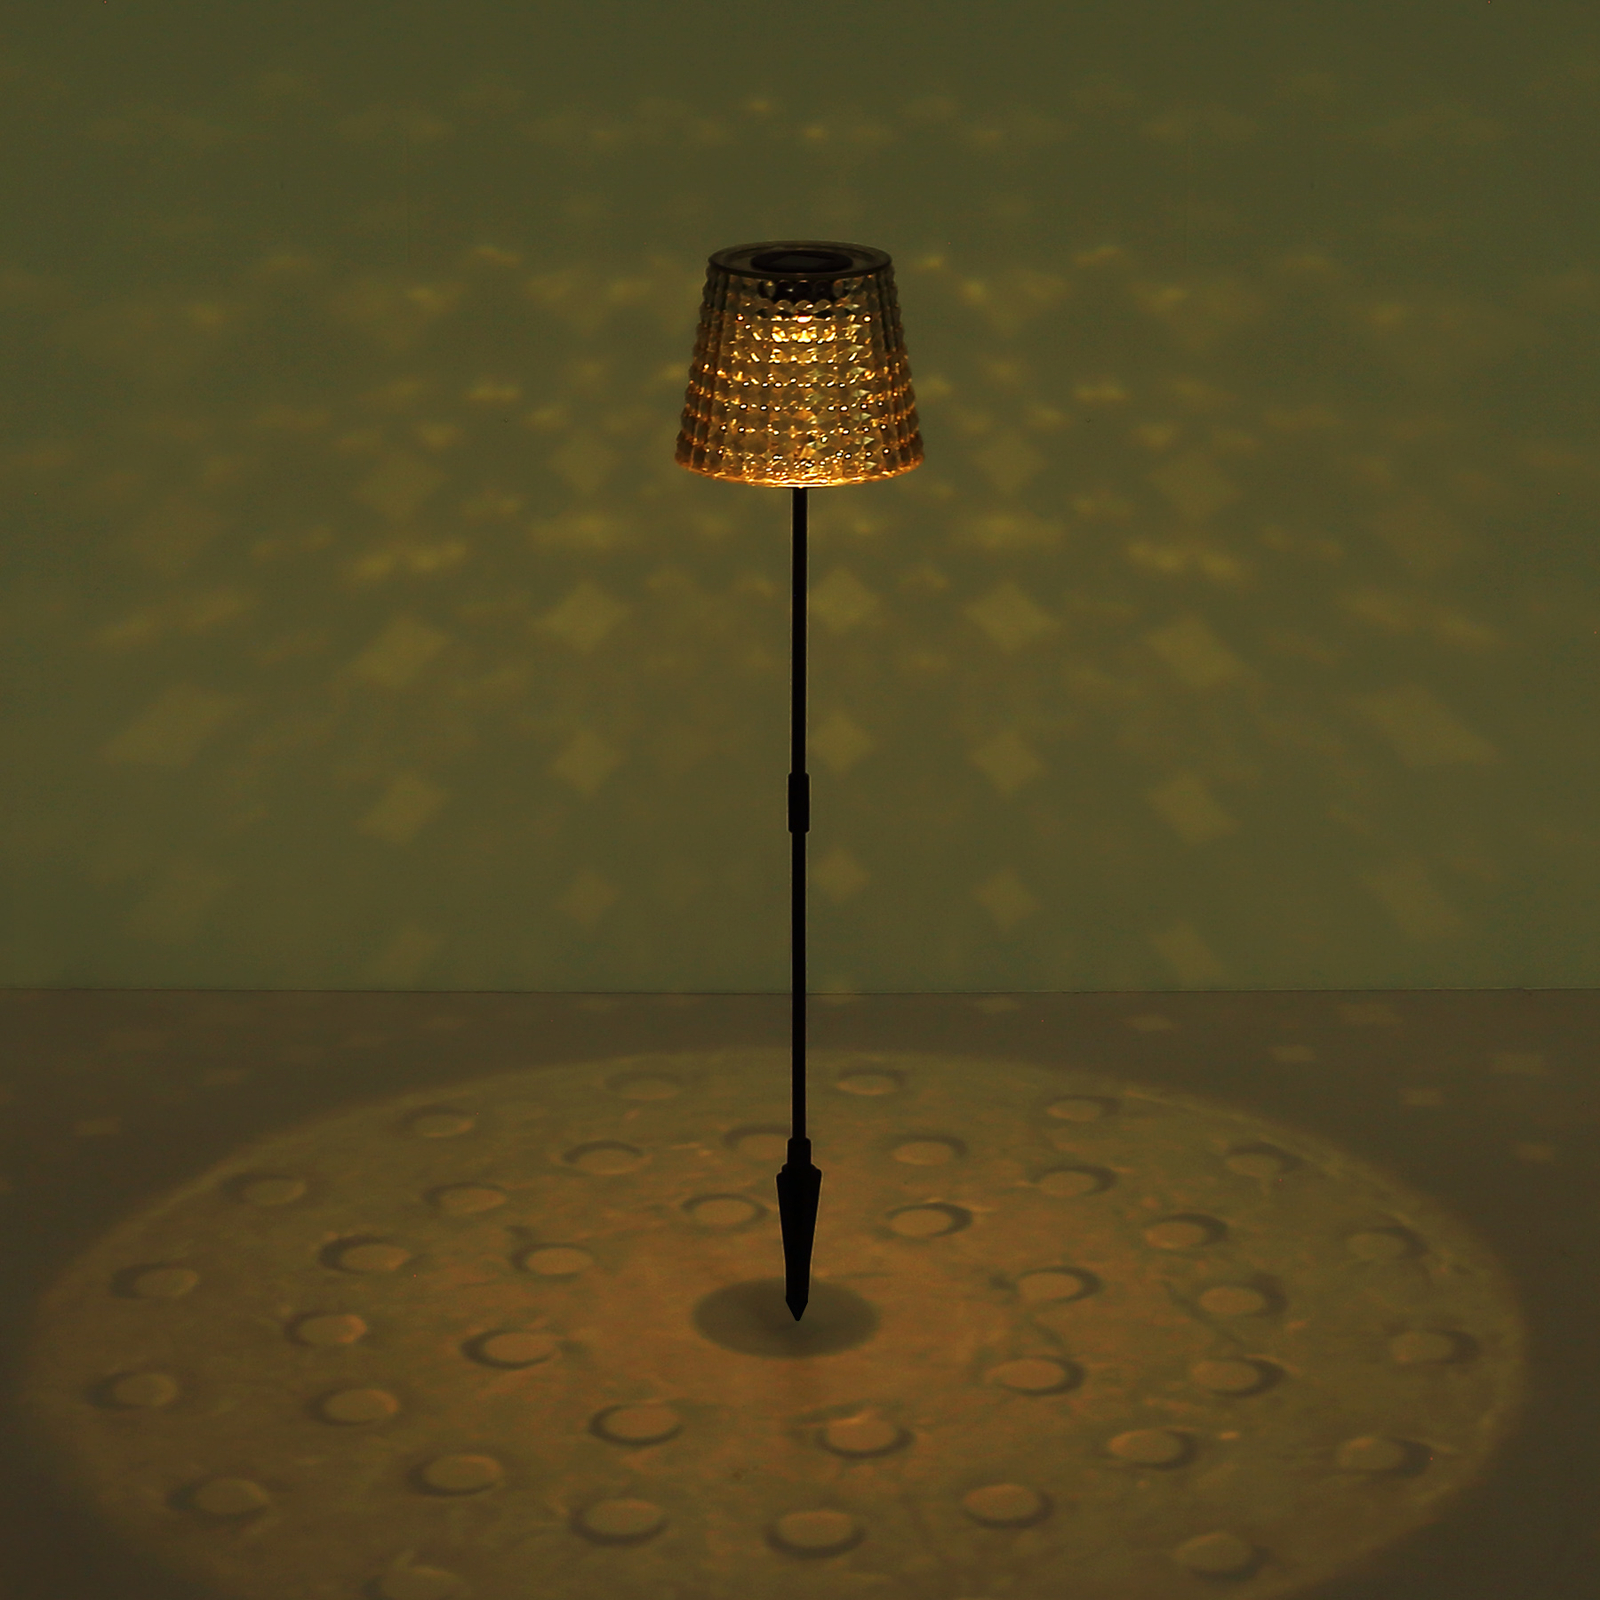 6635-2A solar ground spike lamp 2-set black/amber